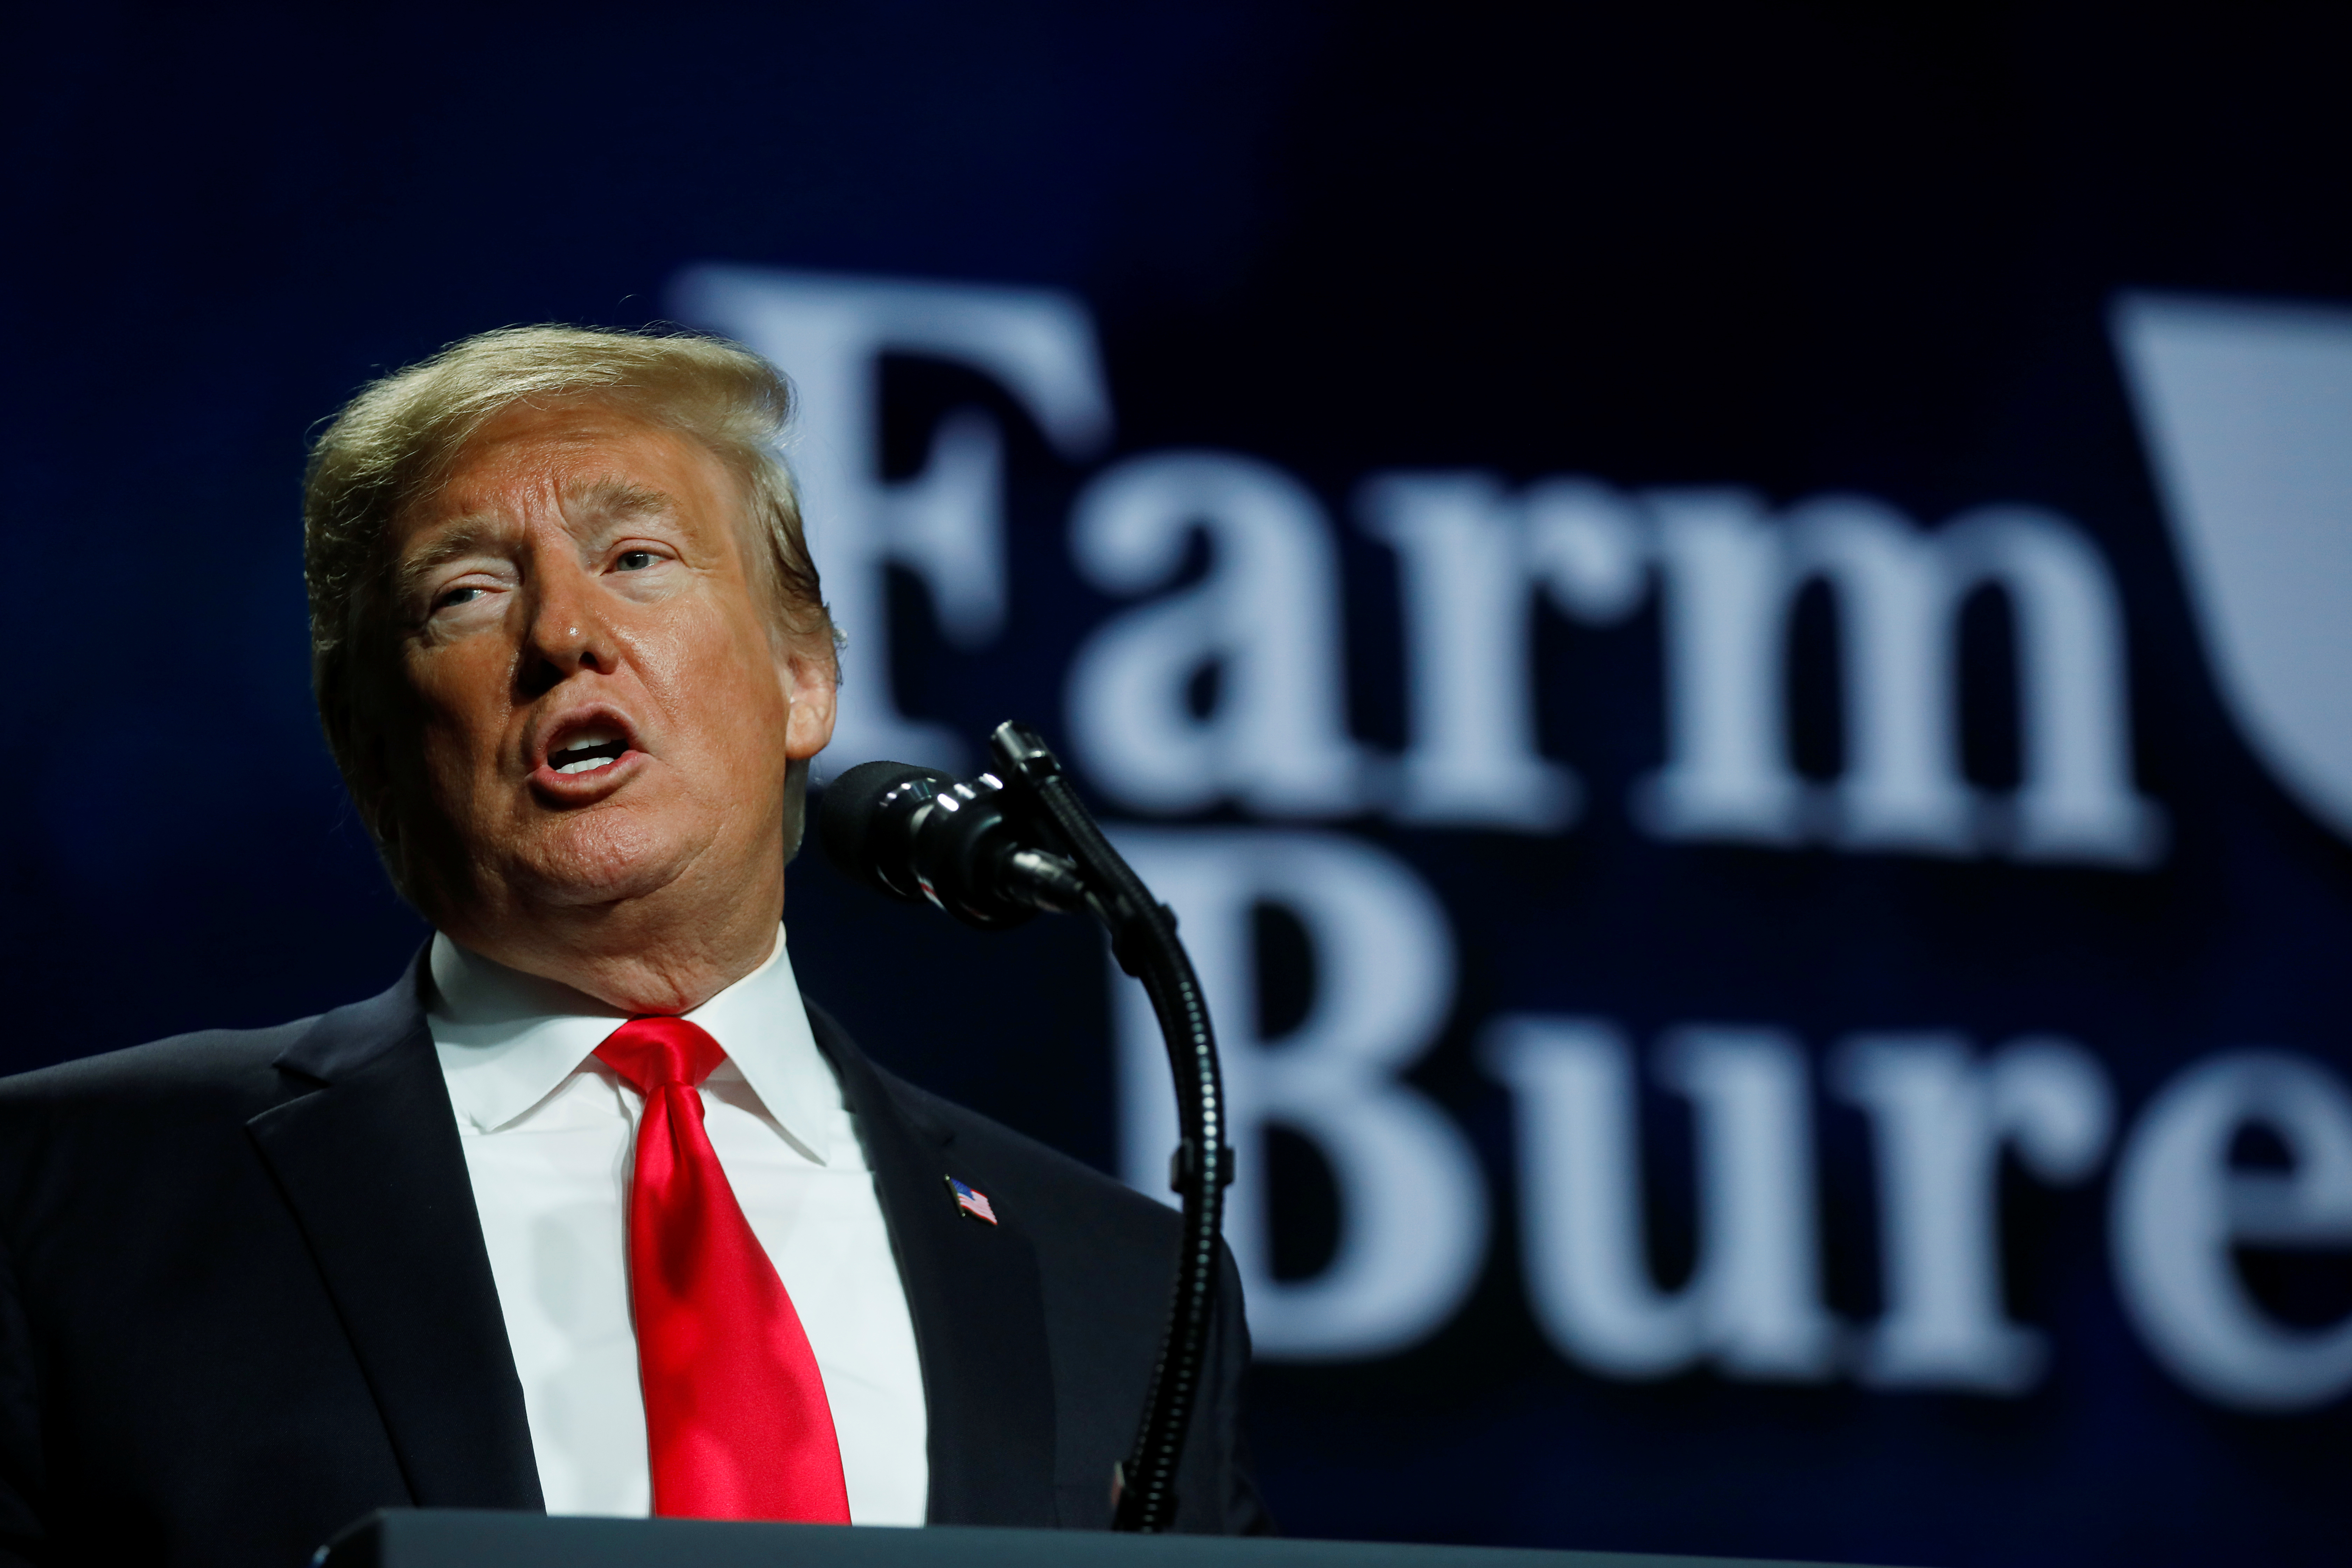 U.S. President Donald Trump addresses the National Farm Bureau Federation's 100th convention in New Orleans, Louisiana, U.S., January 14, 2019. REUTERS/Carlos Barria